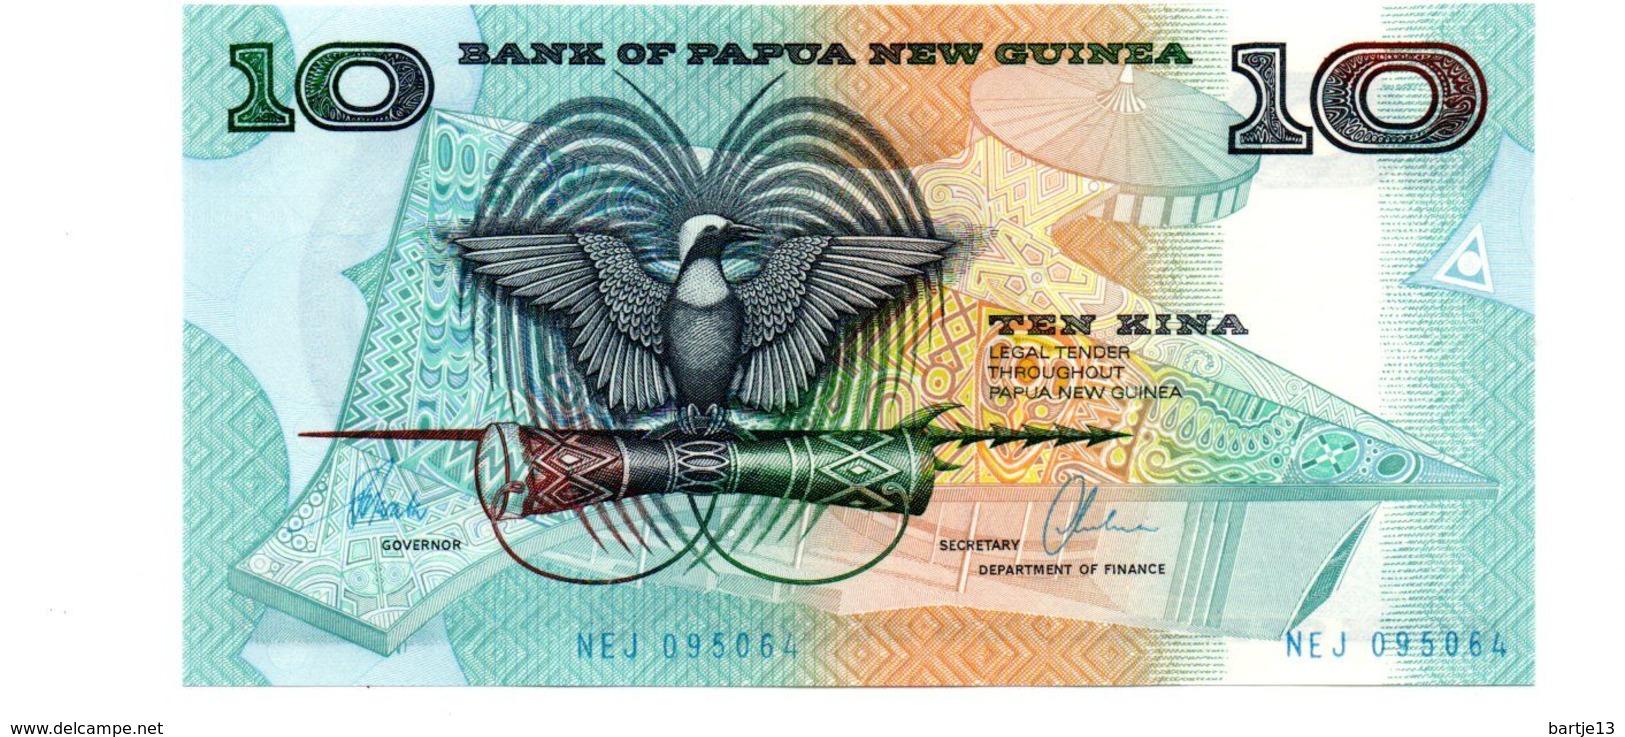 PAPOEA NIEUW GUINEA 10 KINA PICK 9d UNCIRCULATED - Papua New Guinea